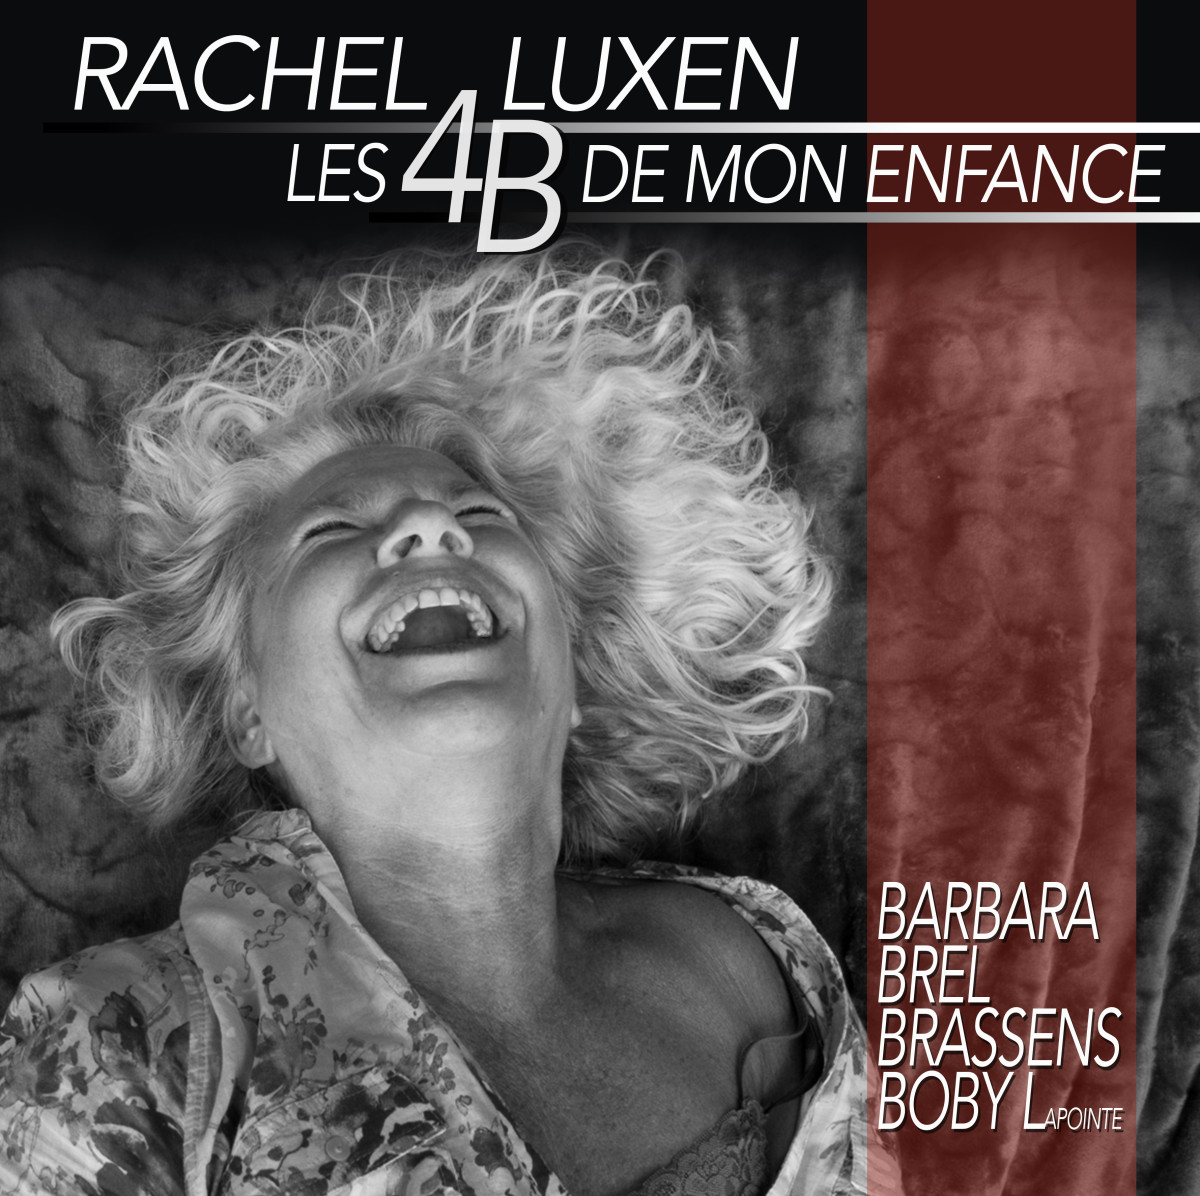 Barbara, Brel, Brassens, Boby Lapointe par Rachel Luxen